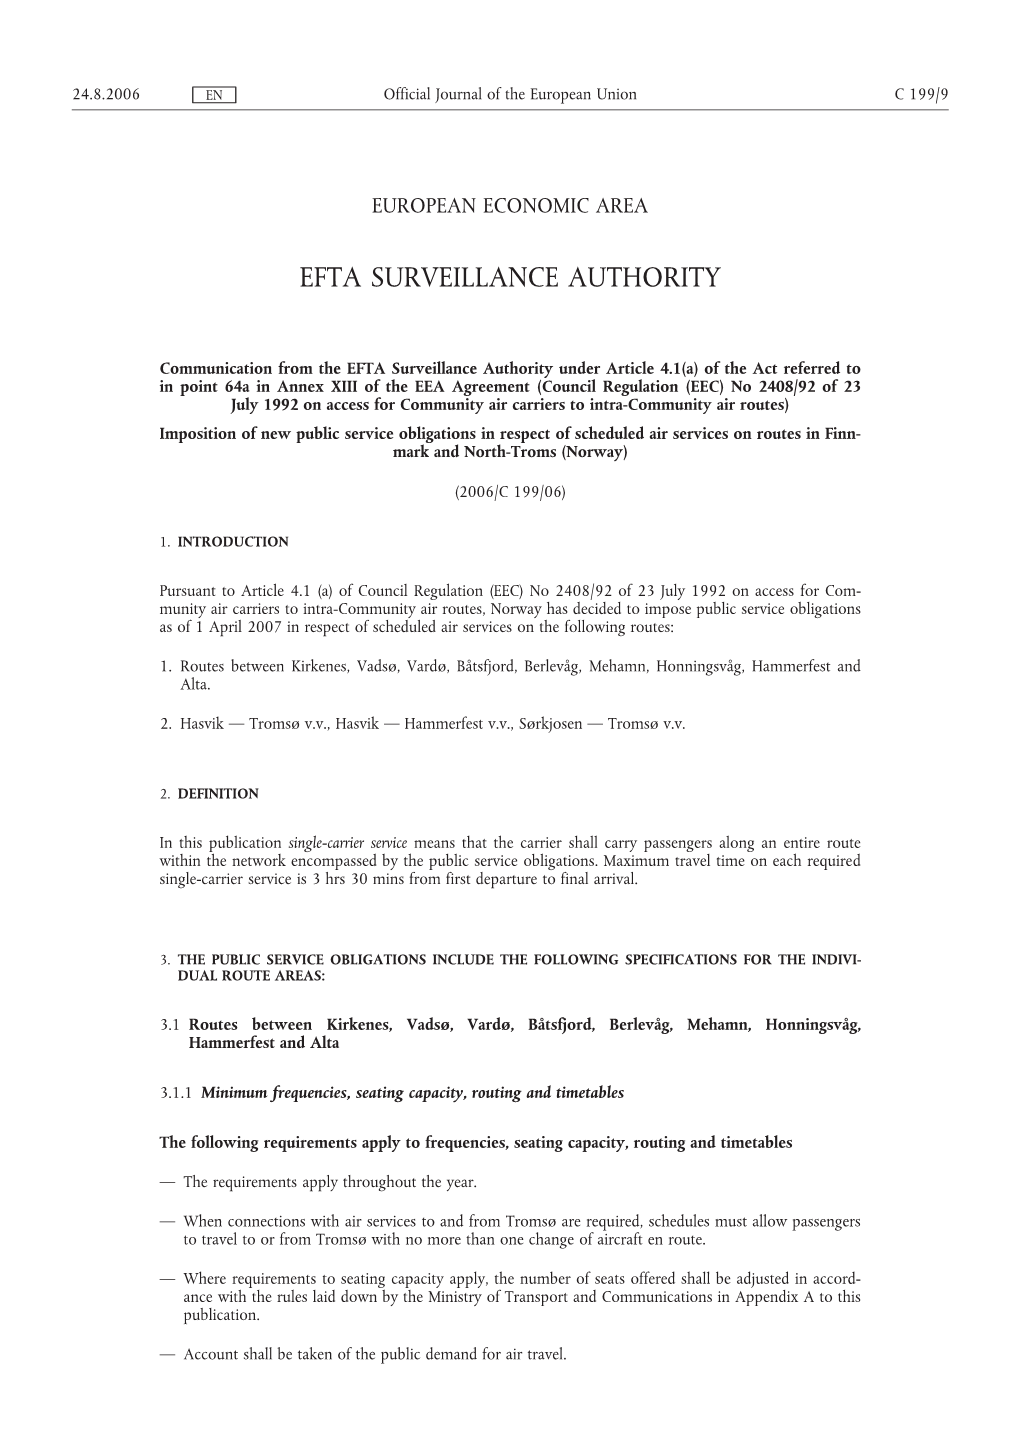 Efta Surveillance Authority